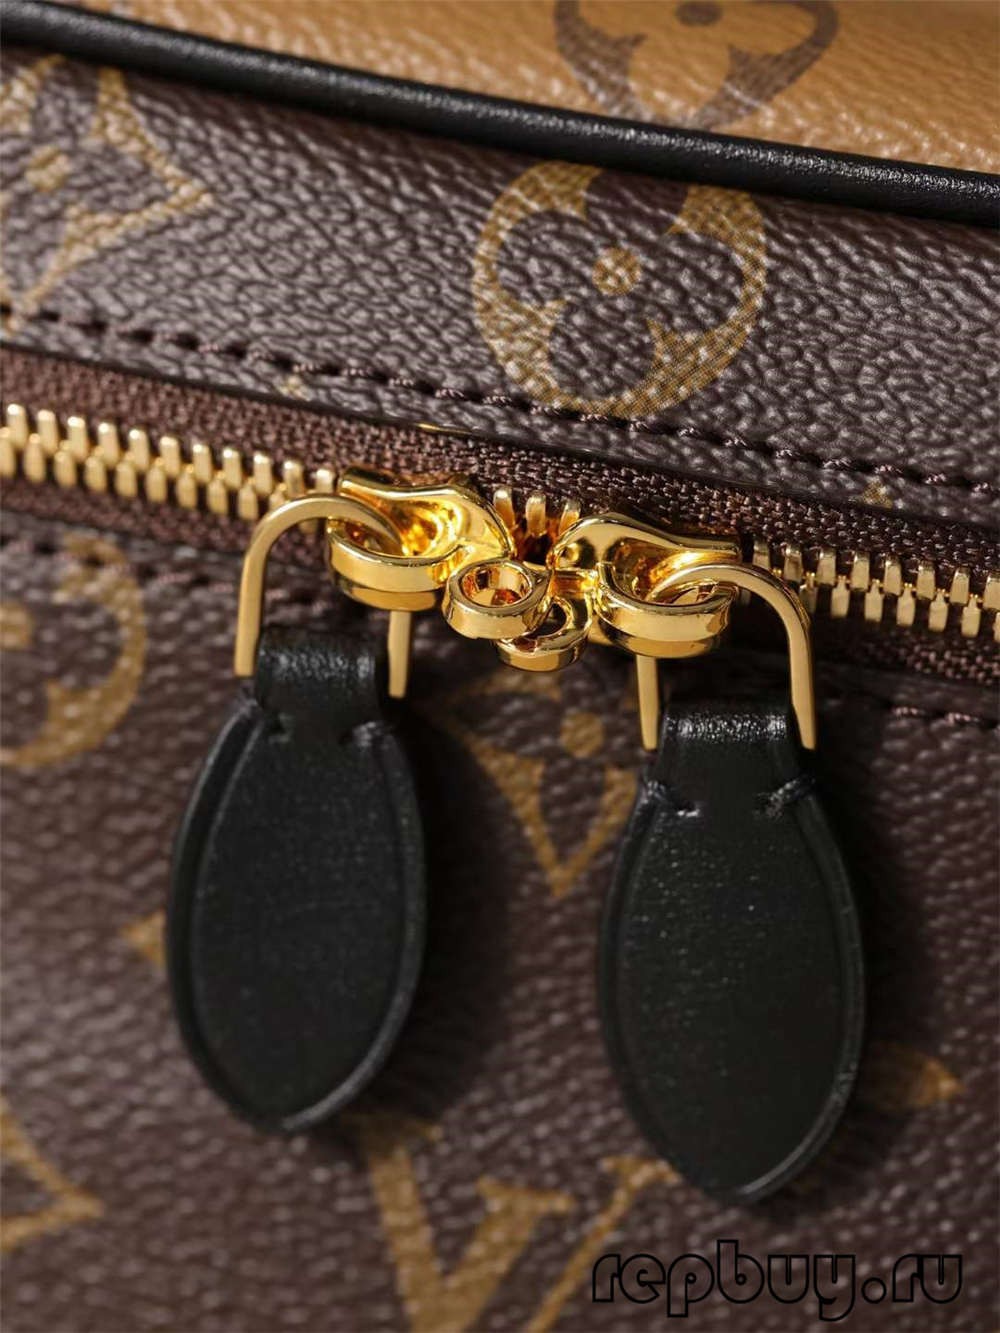 Louis Vuitton M45165 VANITY Малка копия на ръчна чанта с лого и детайли за затваряне (2022 г. актуализиран)-Best Quality Fake Louis Vuitton Bag Online Store, Replica designer bag ru